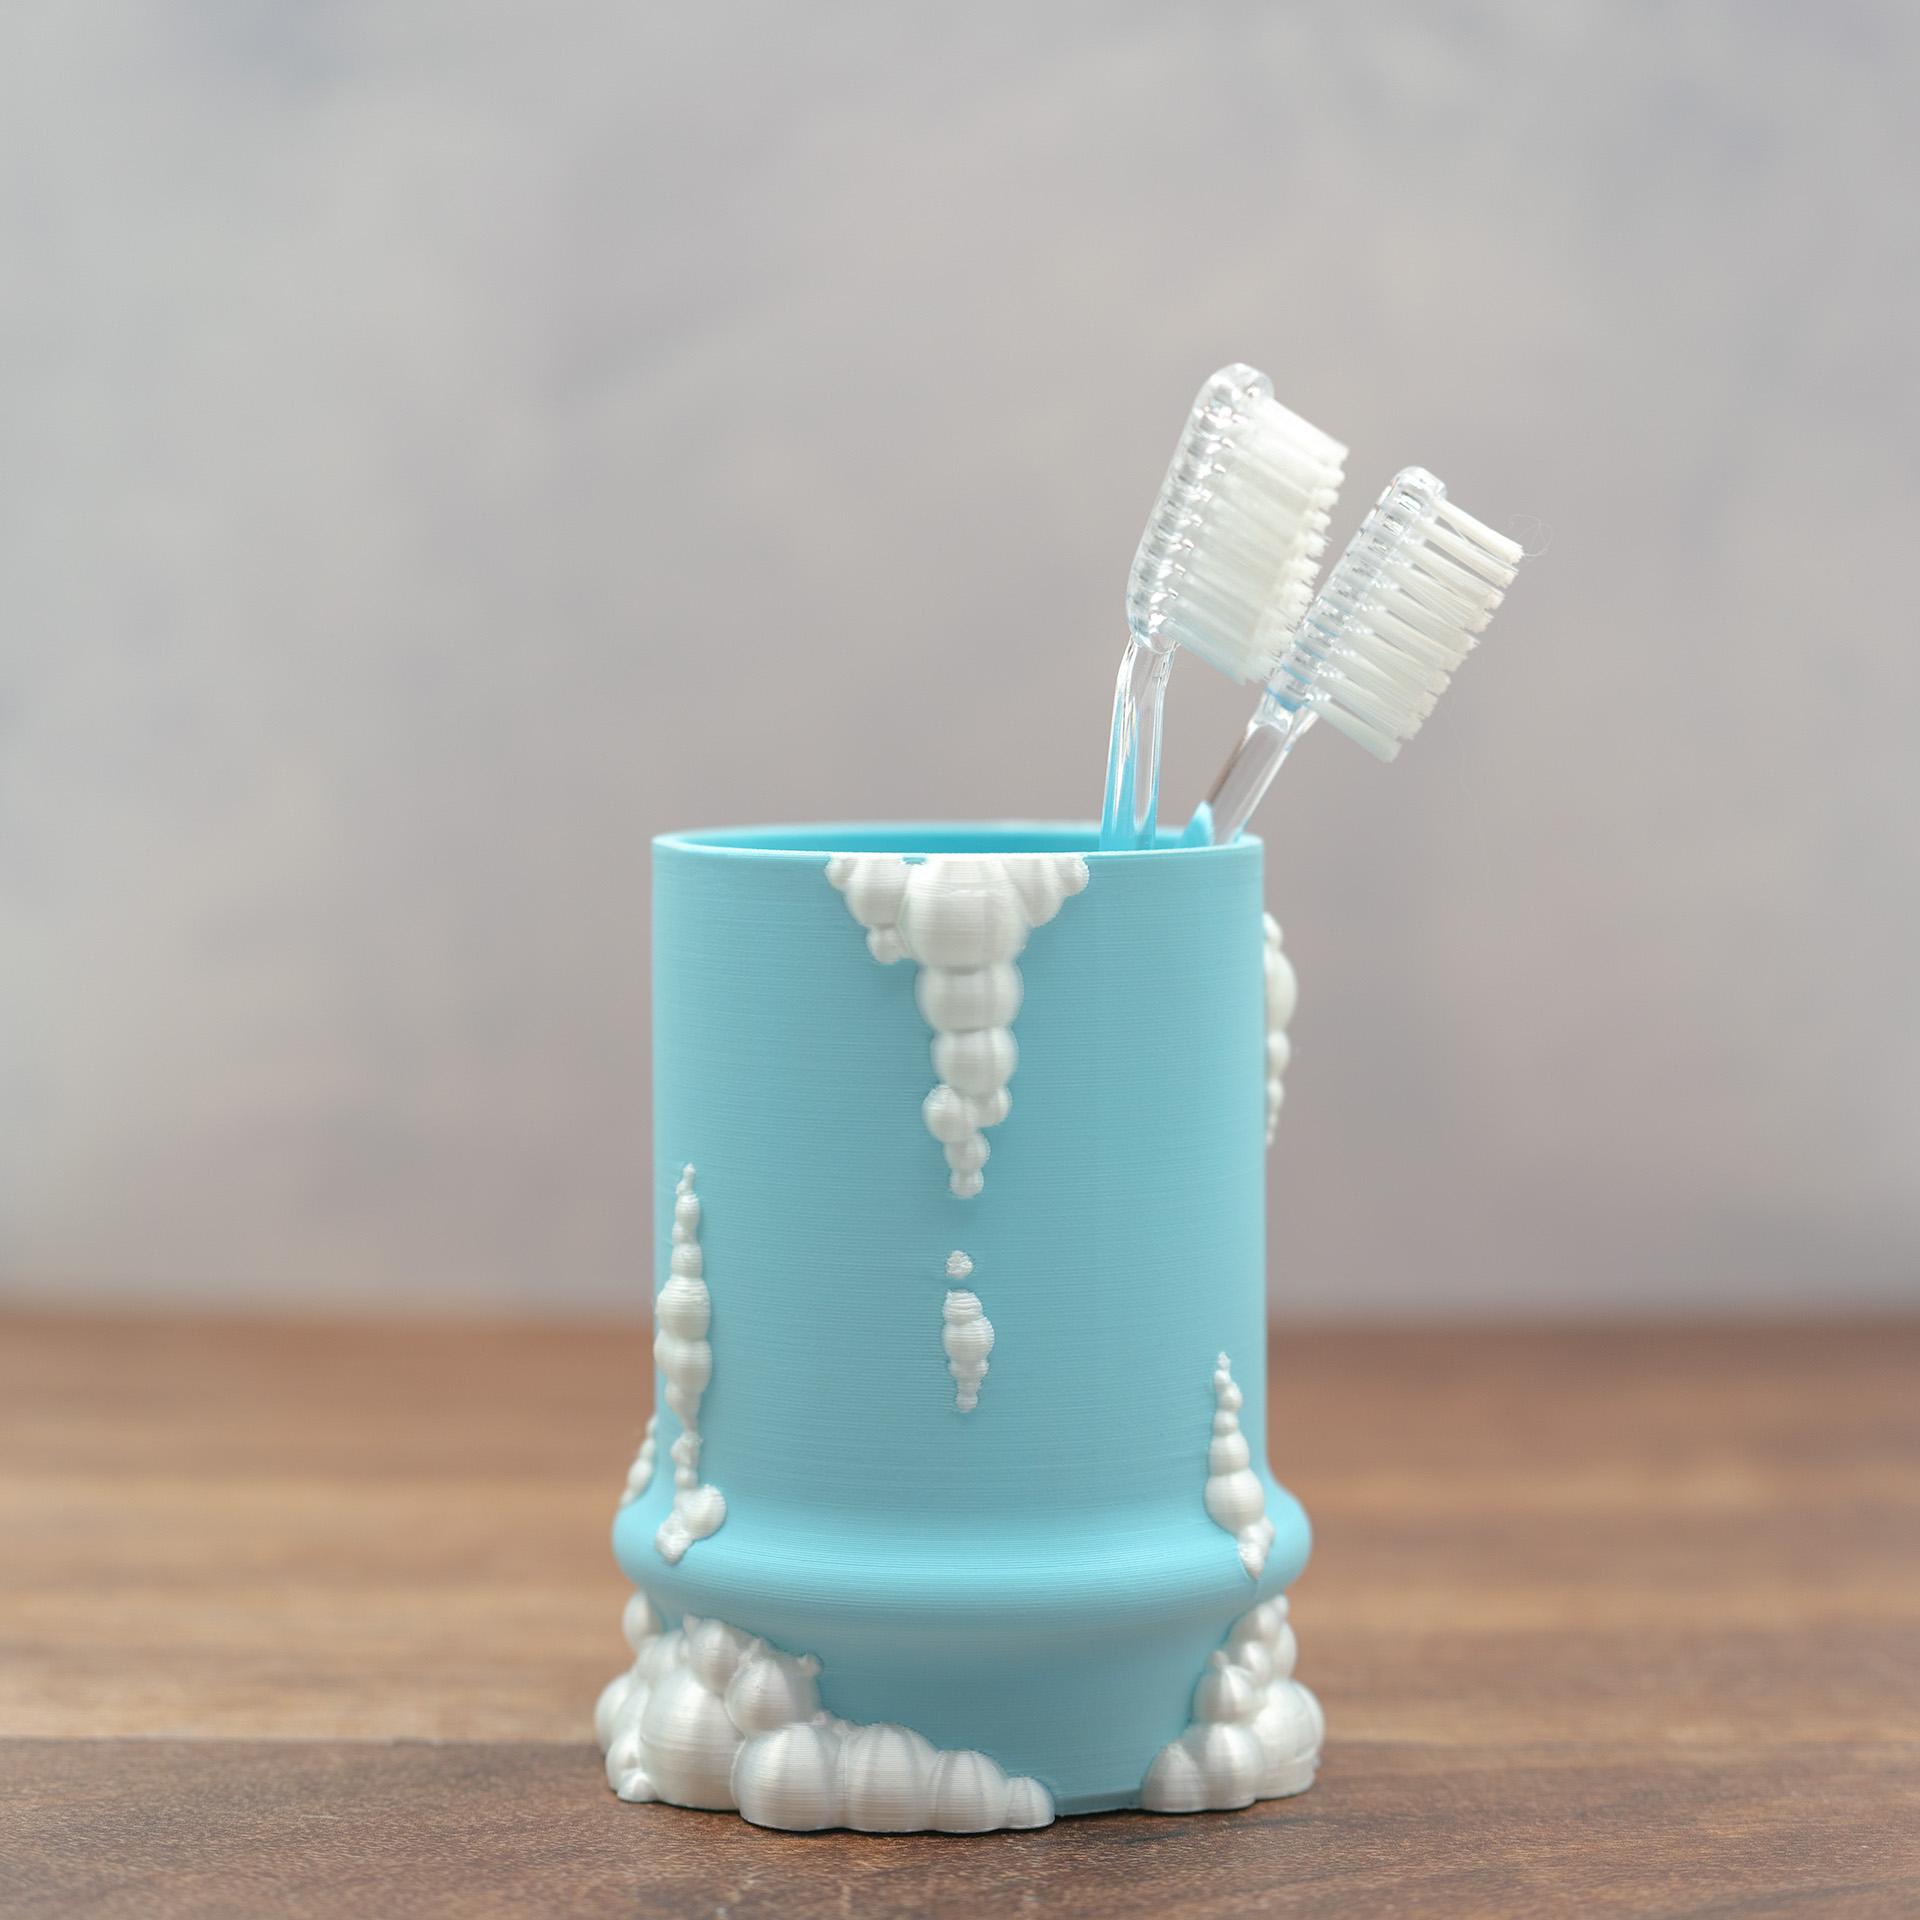 Toothbrush holder “bubbles” 3d model